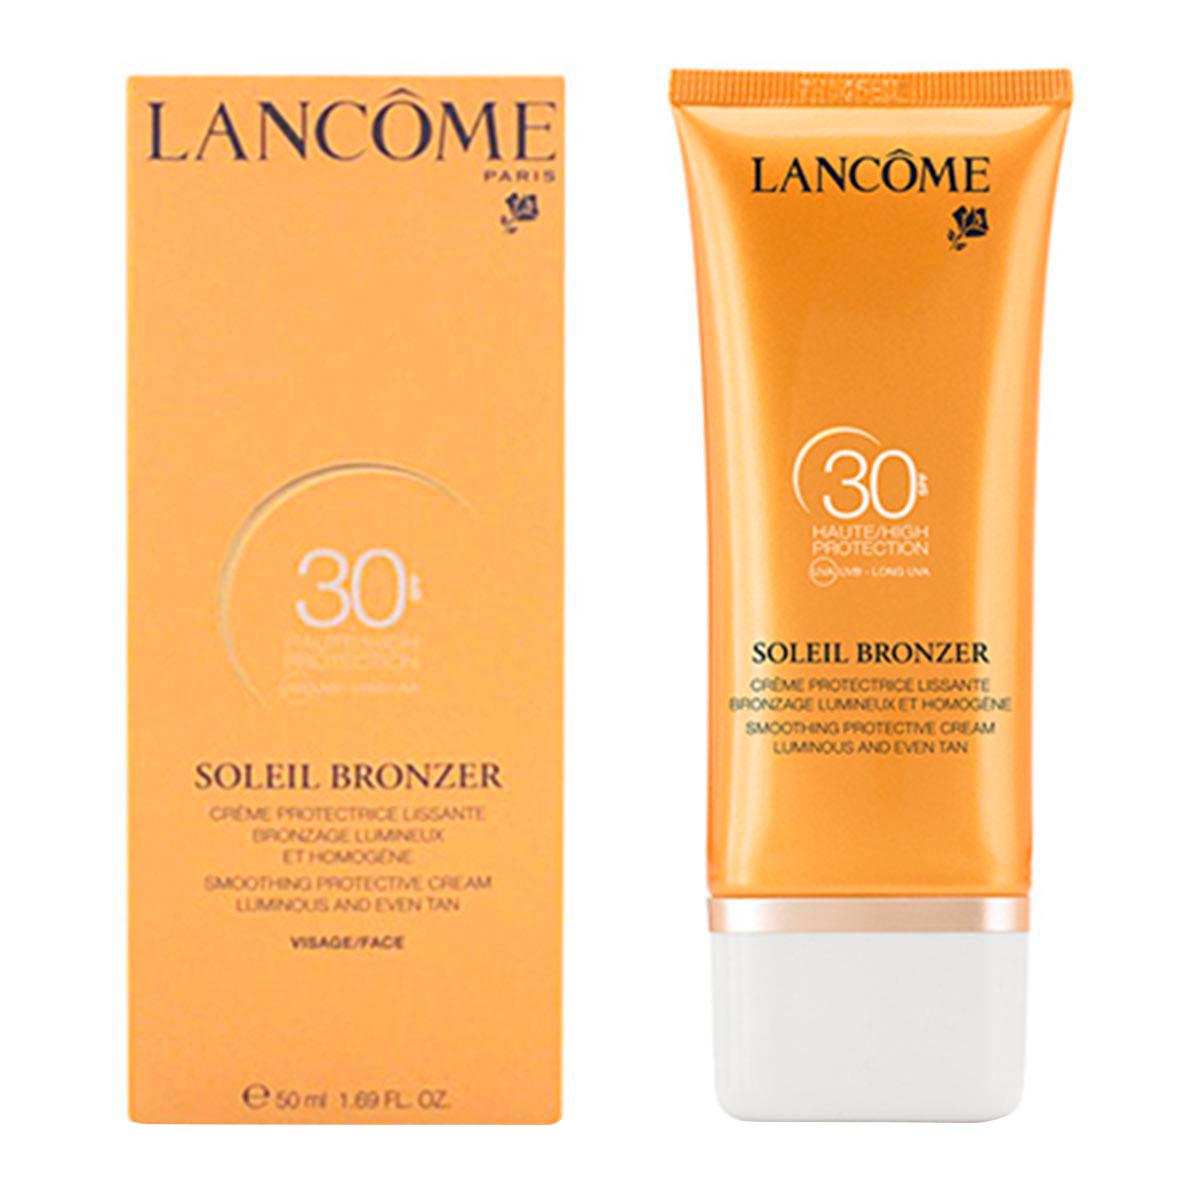 lancome-soleil-bronzer-spf30-50ml-sun-protector